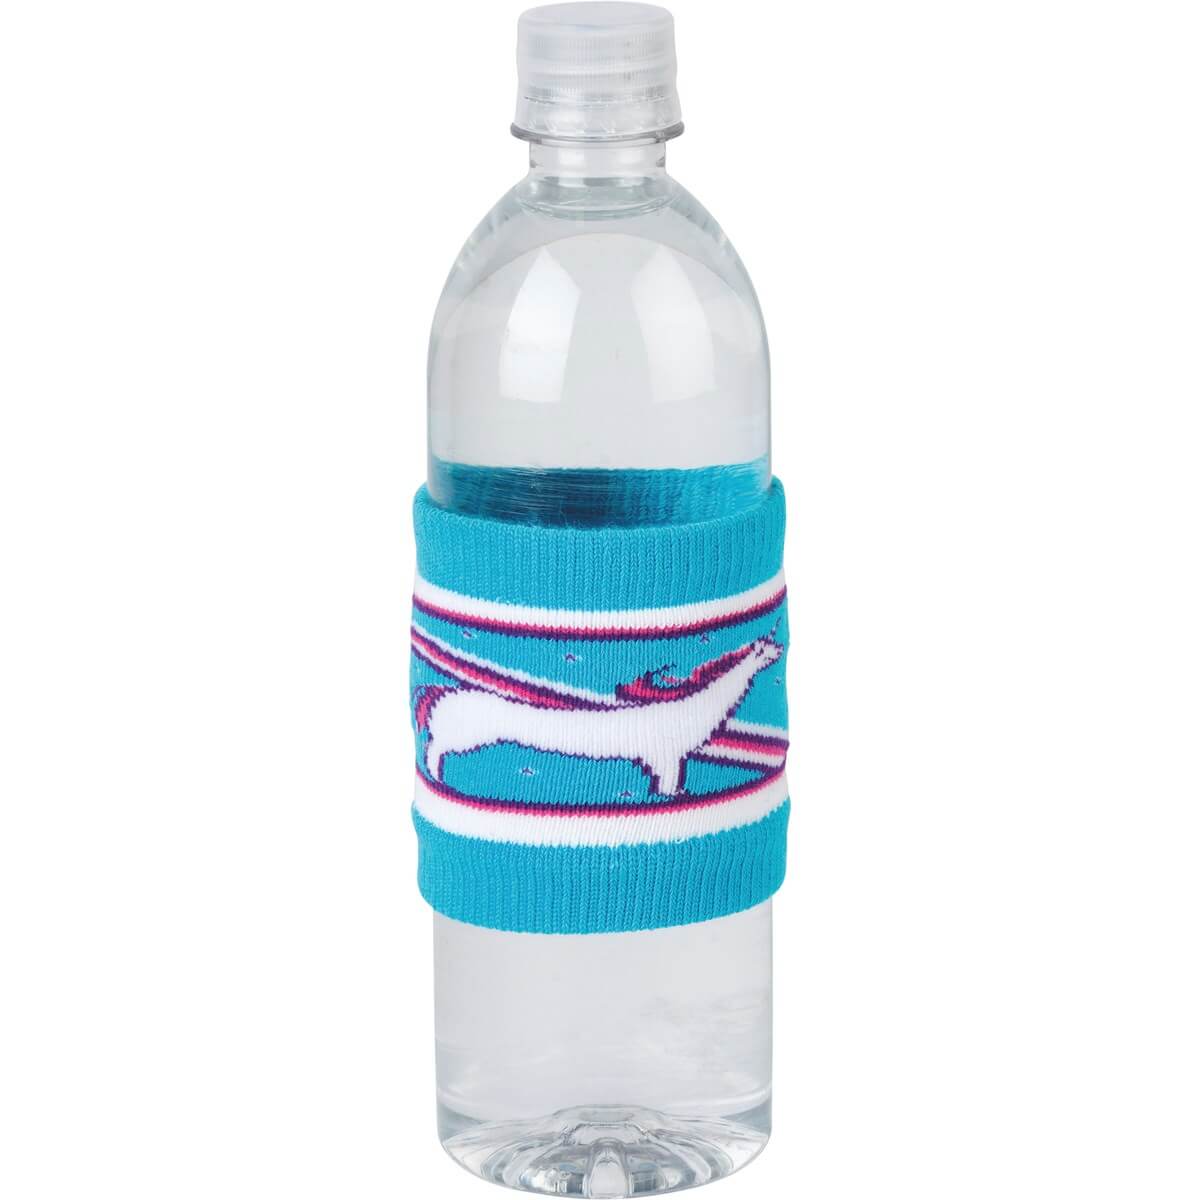 Example of sleeve on water bottle